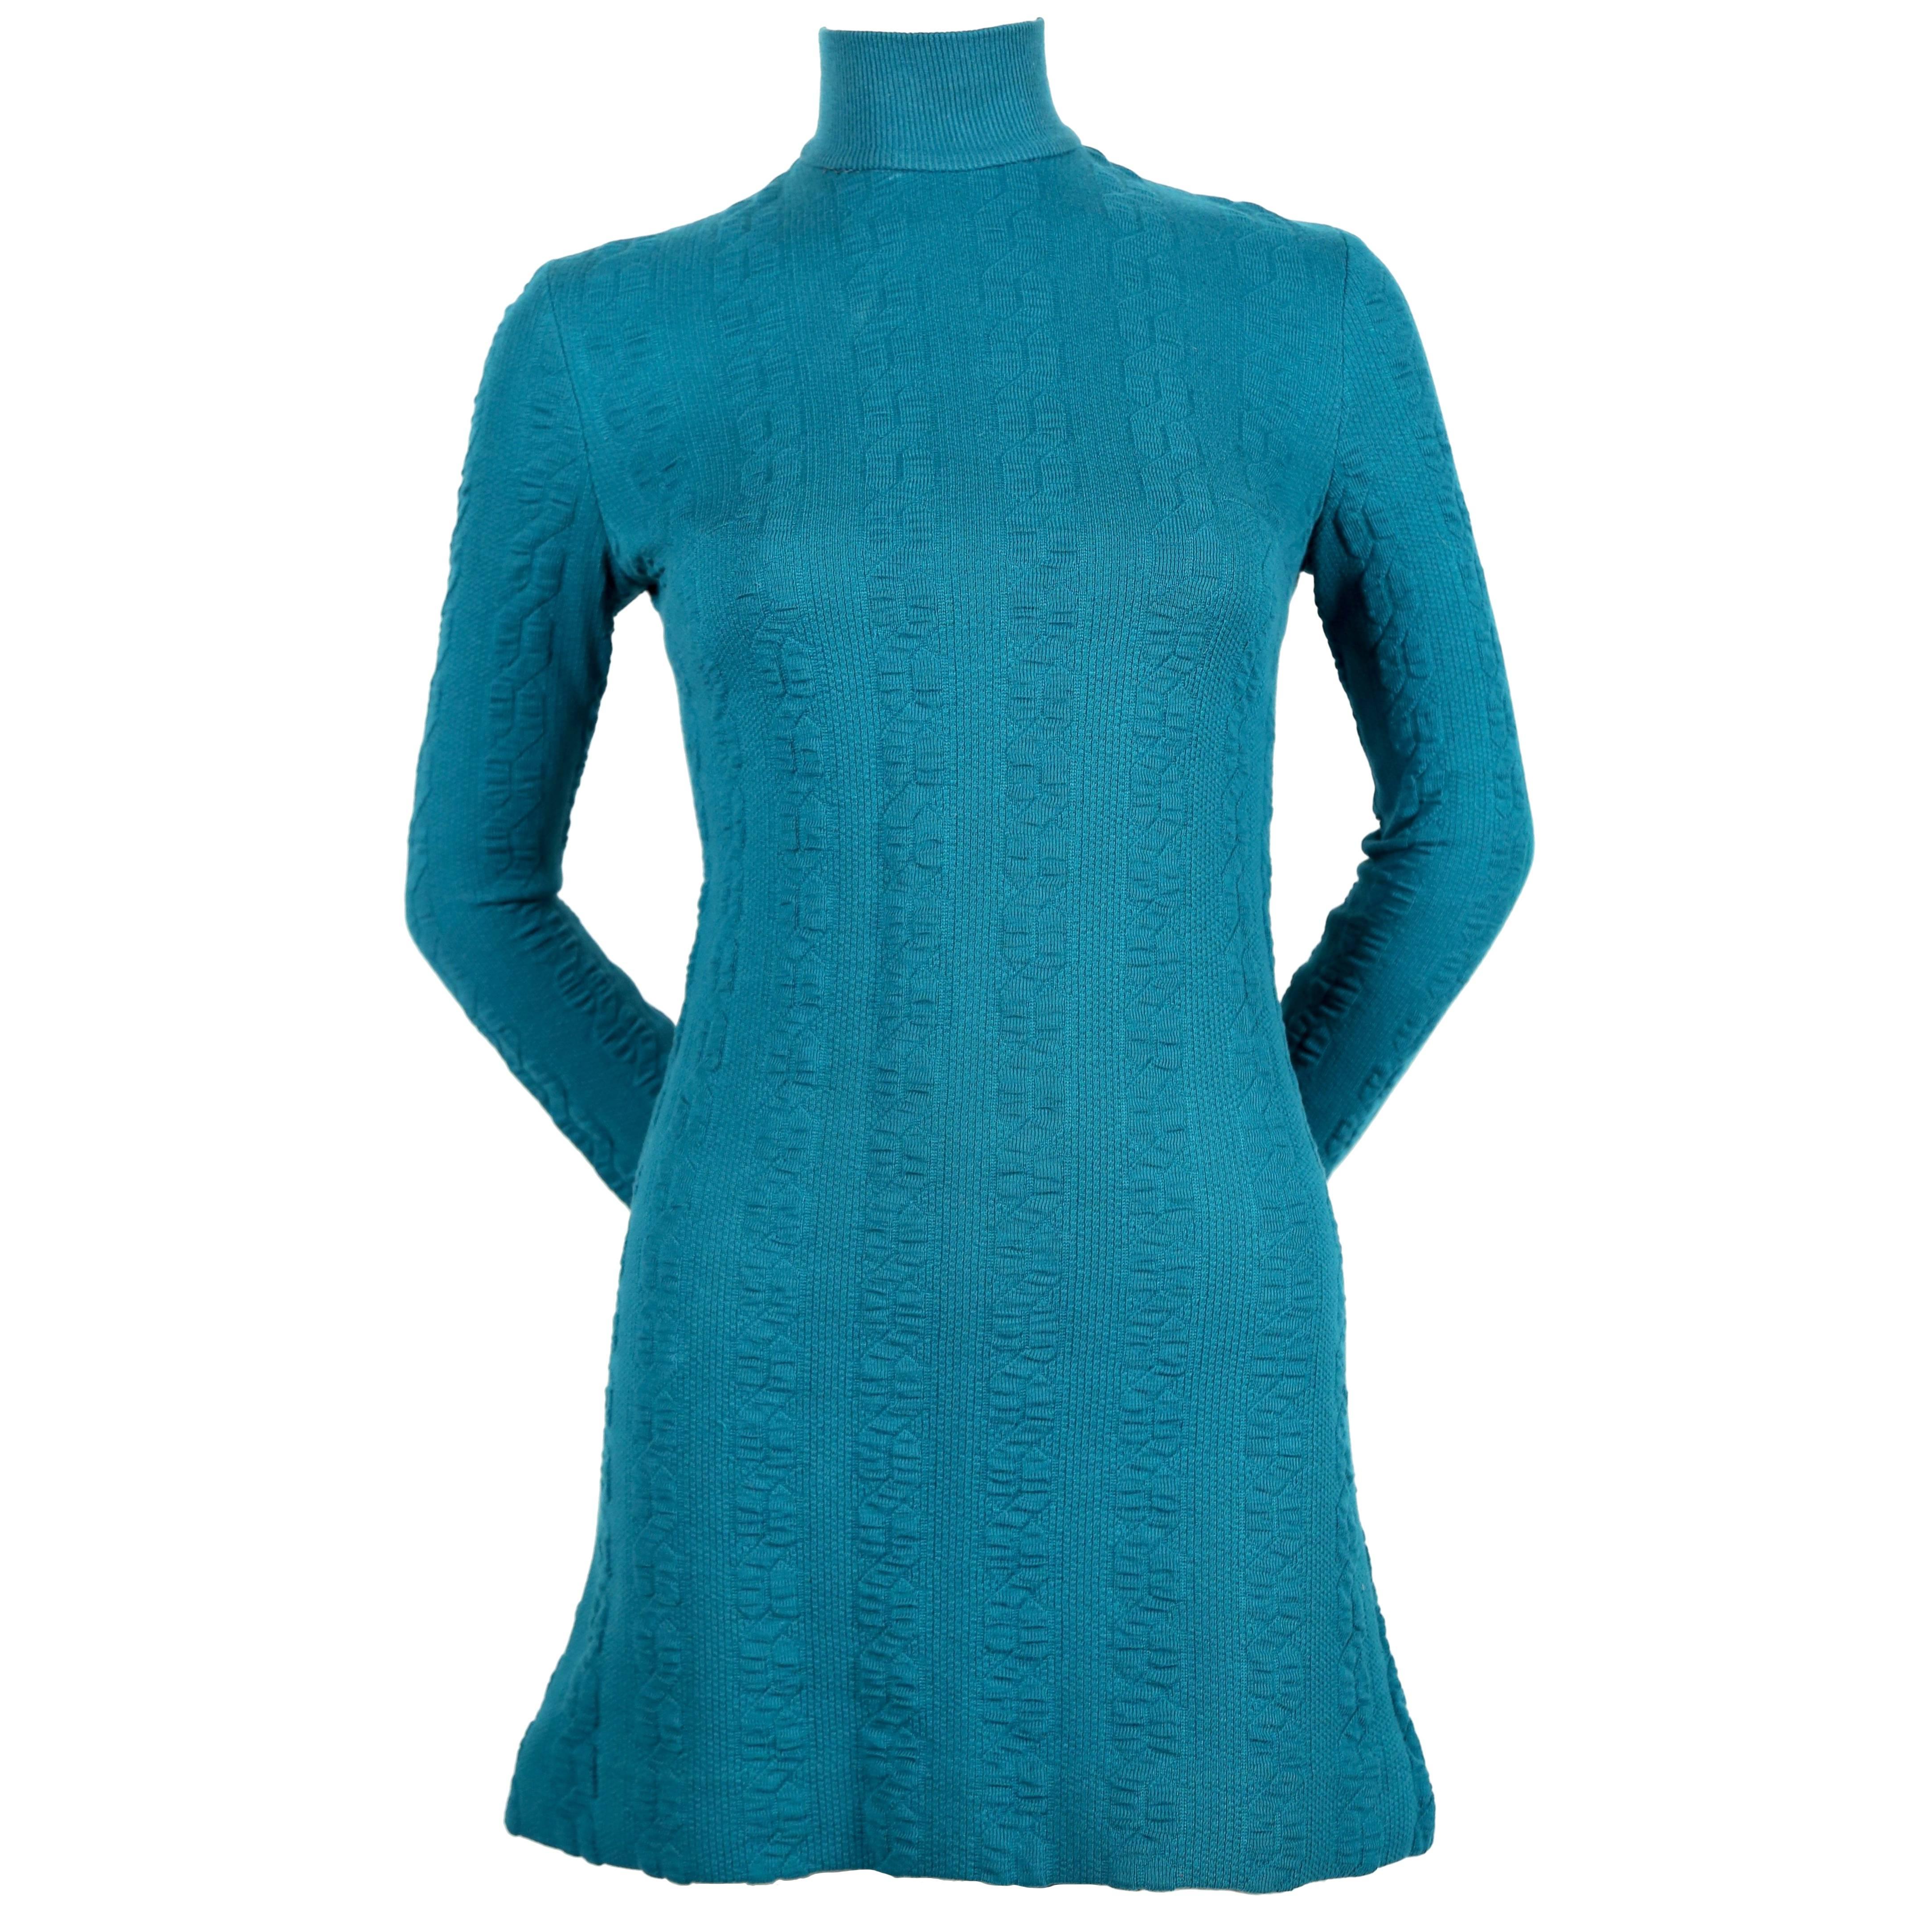 1960's BETSEY JOHNSON for PARAPHERNALIA turquoise mini dress